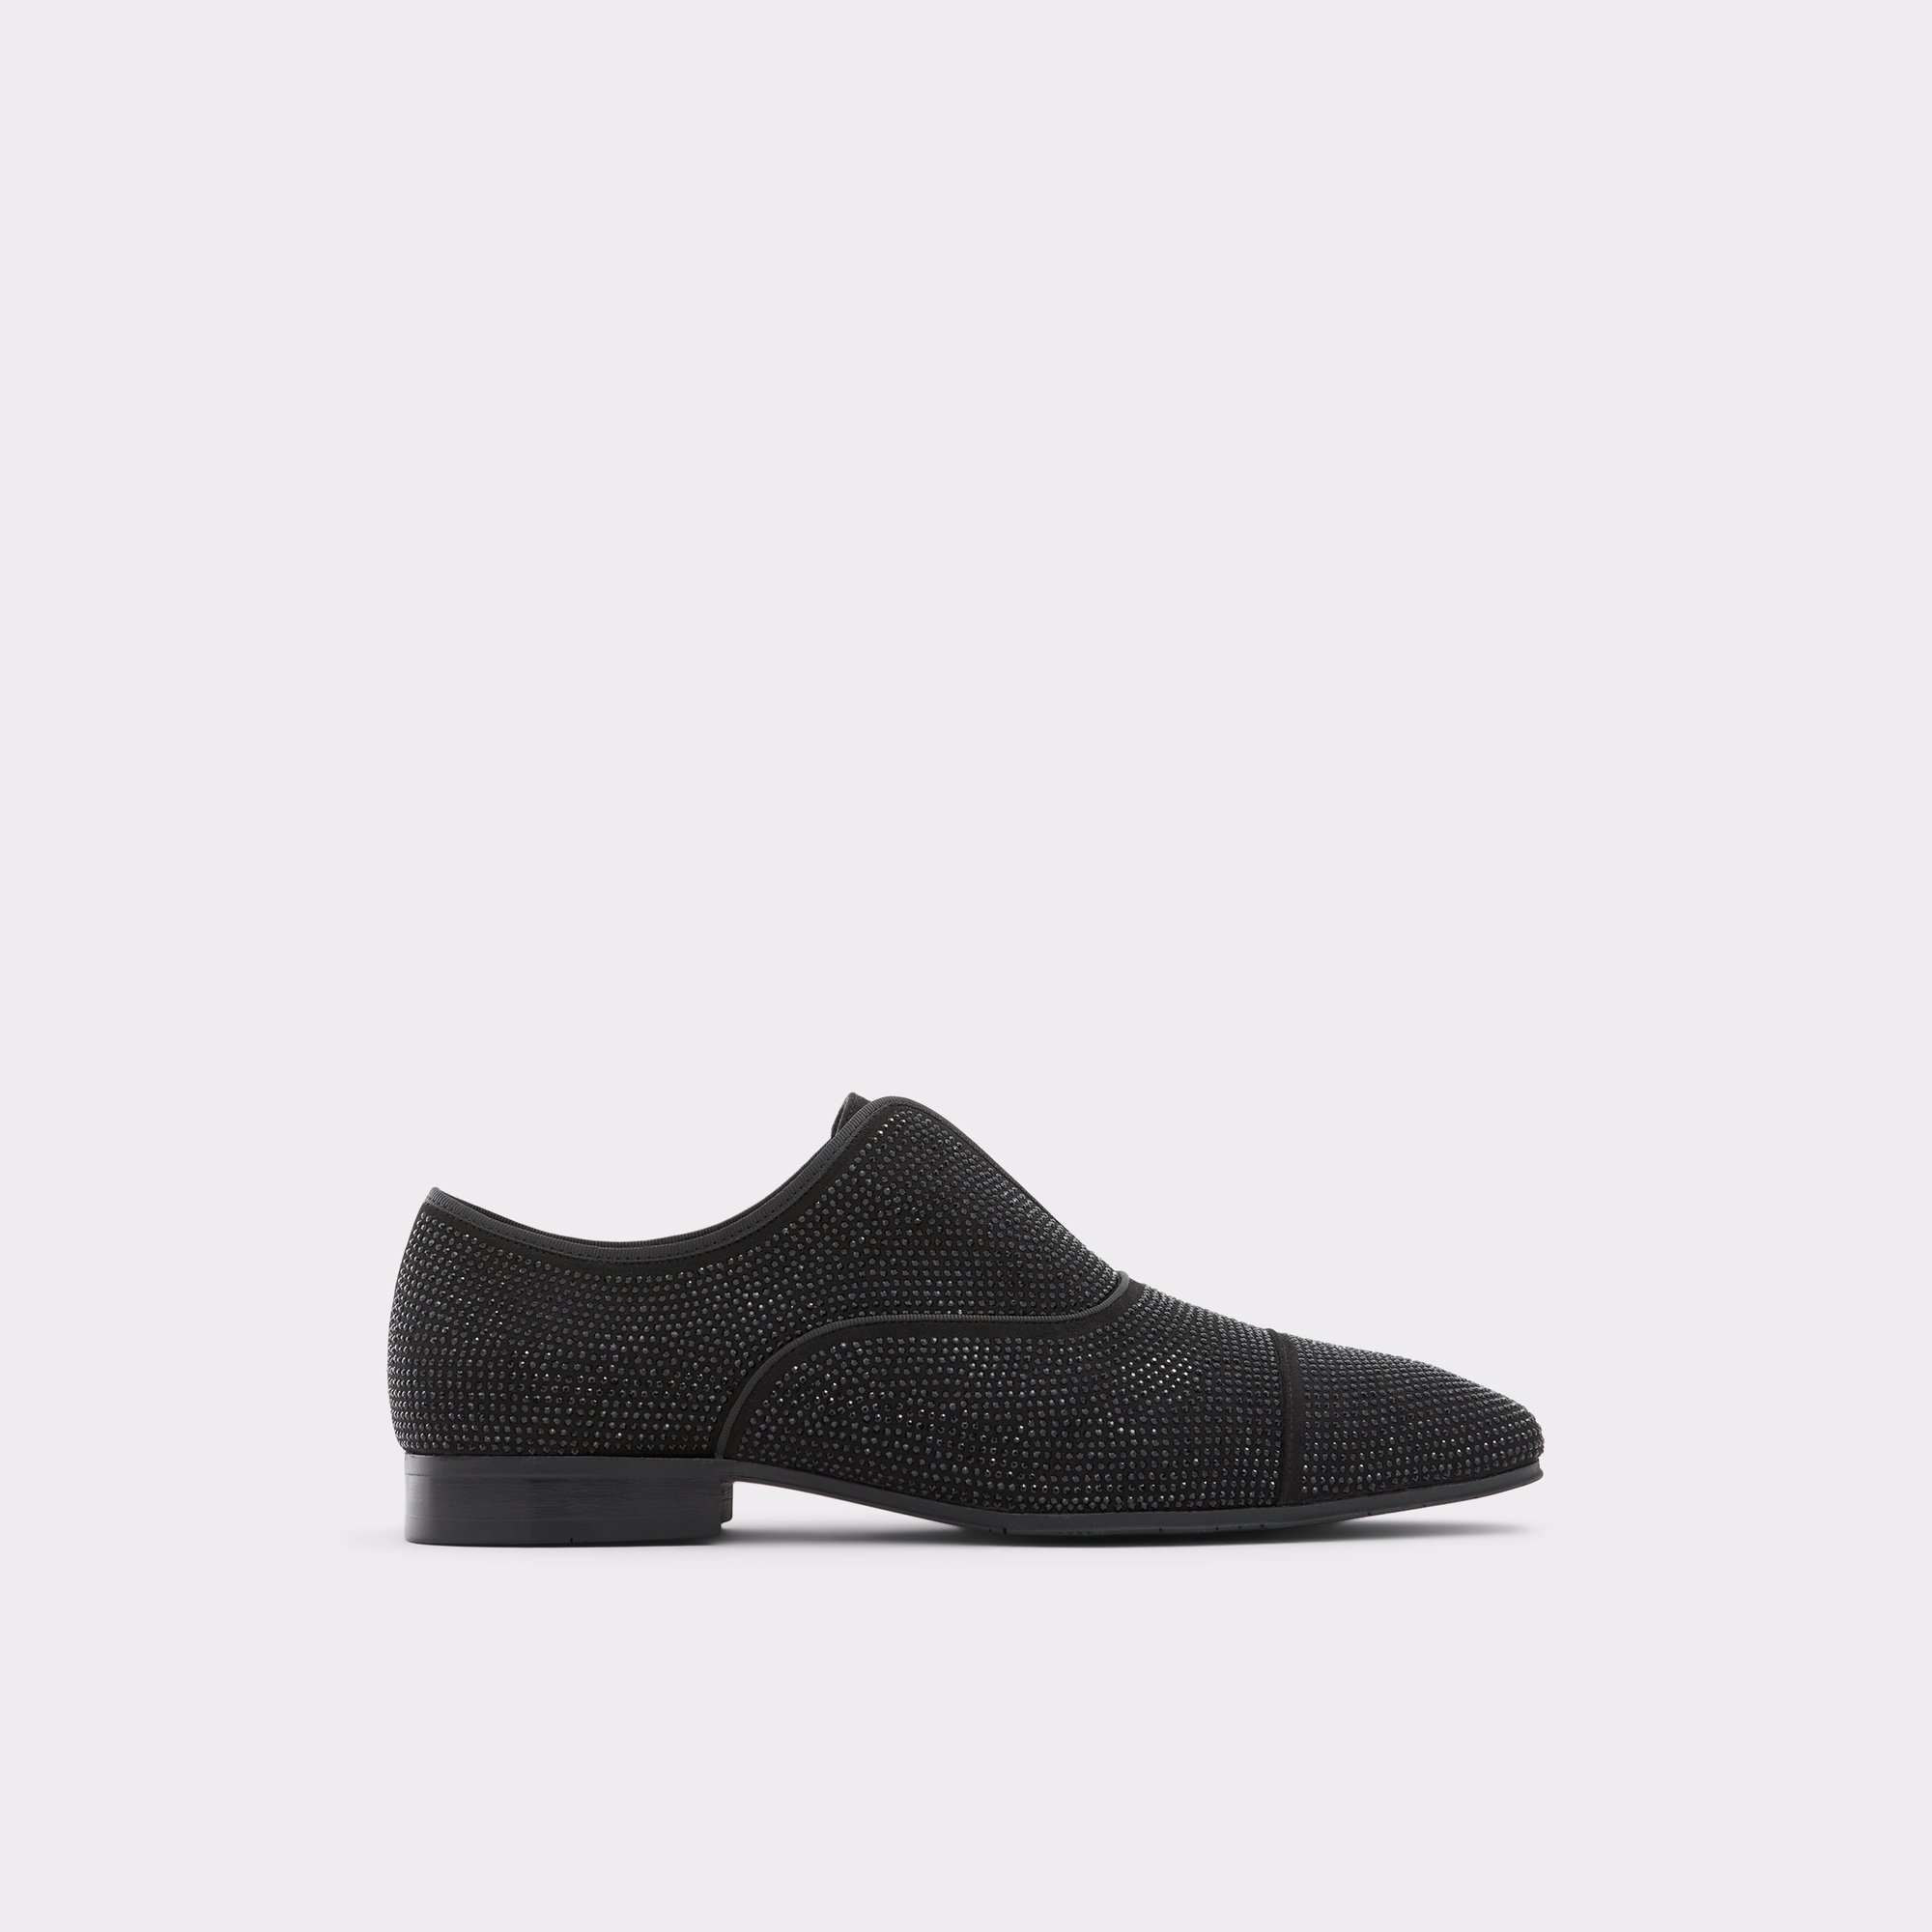 Bolivar Black Textile Shiny Men's Dress Shoes | ALDO US